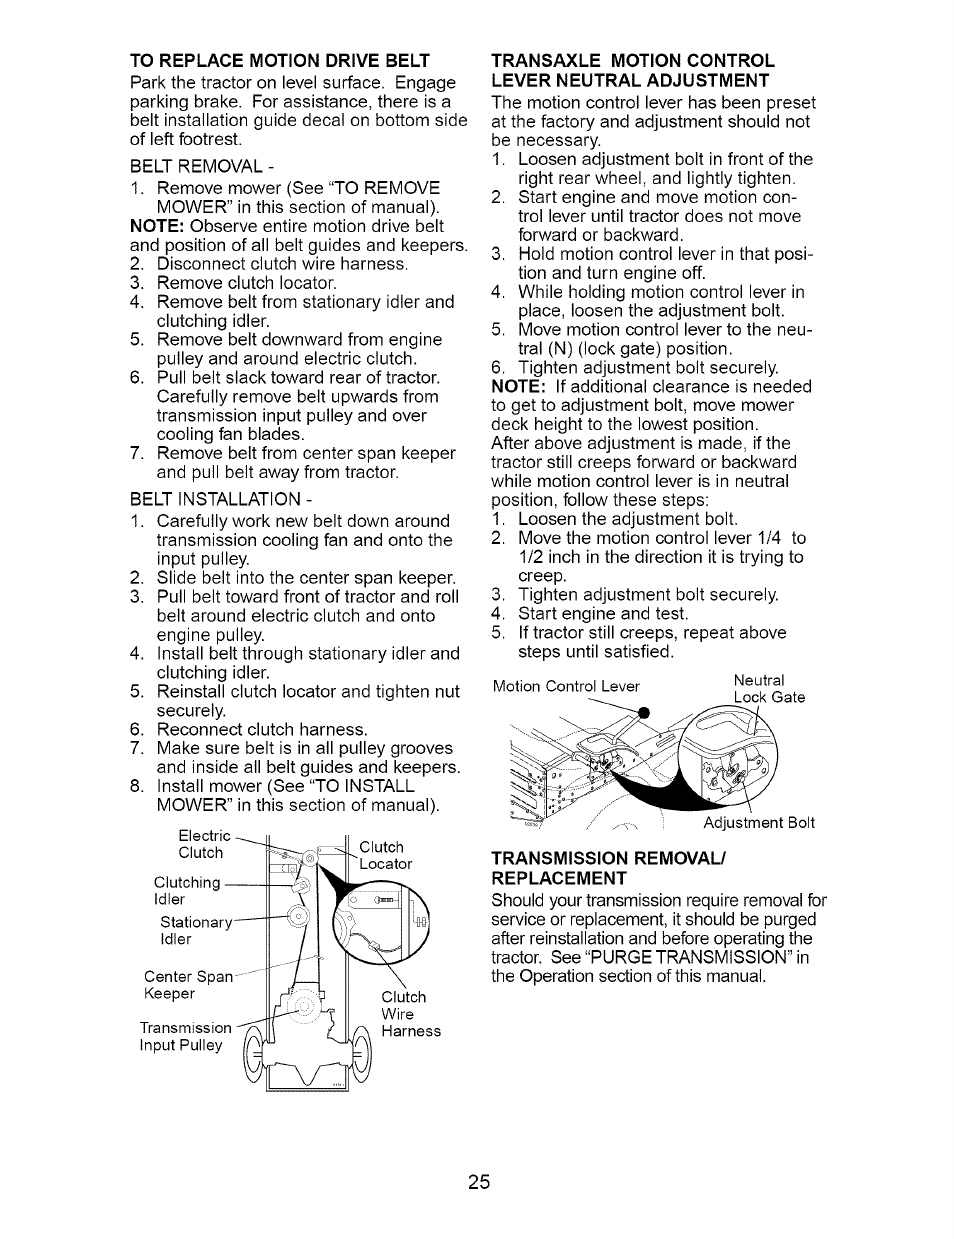 Download Craftsman Model 917 Wiring Diagram Html Full